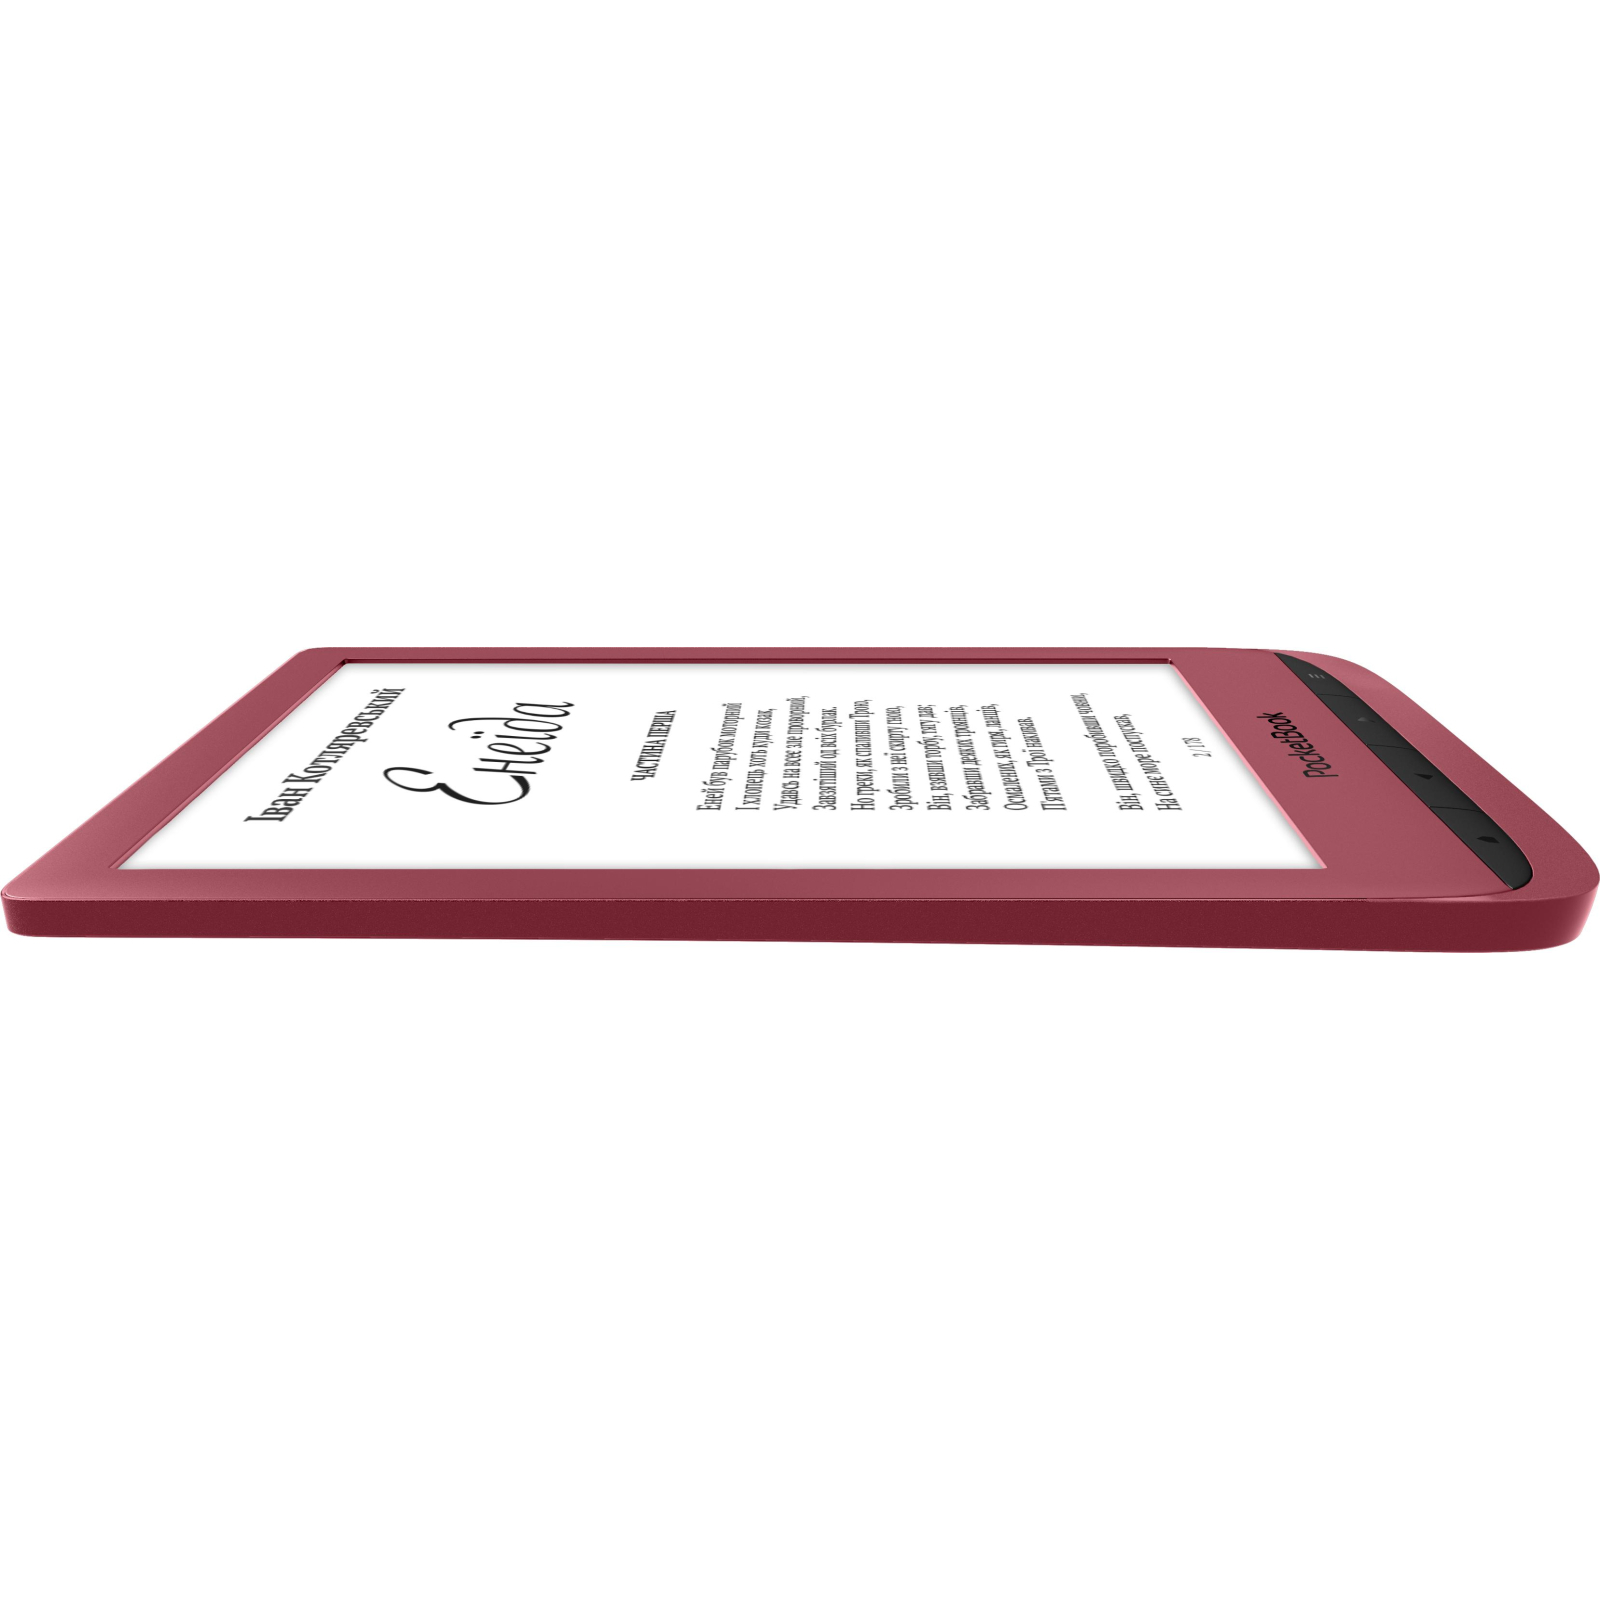 Электронная книга Pocketbook 628 Touch Lux5 Ruby Red (PB628-R-CIS) изображение 10